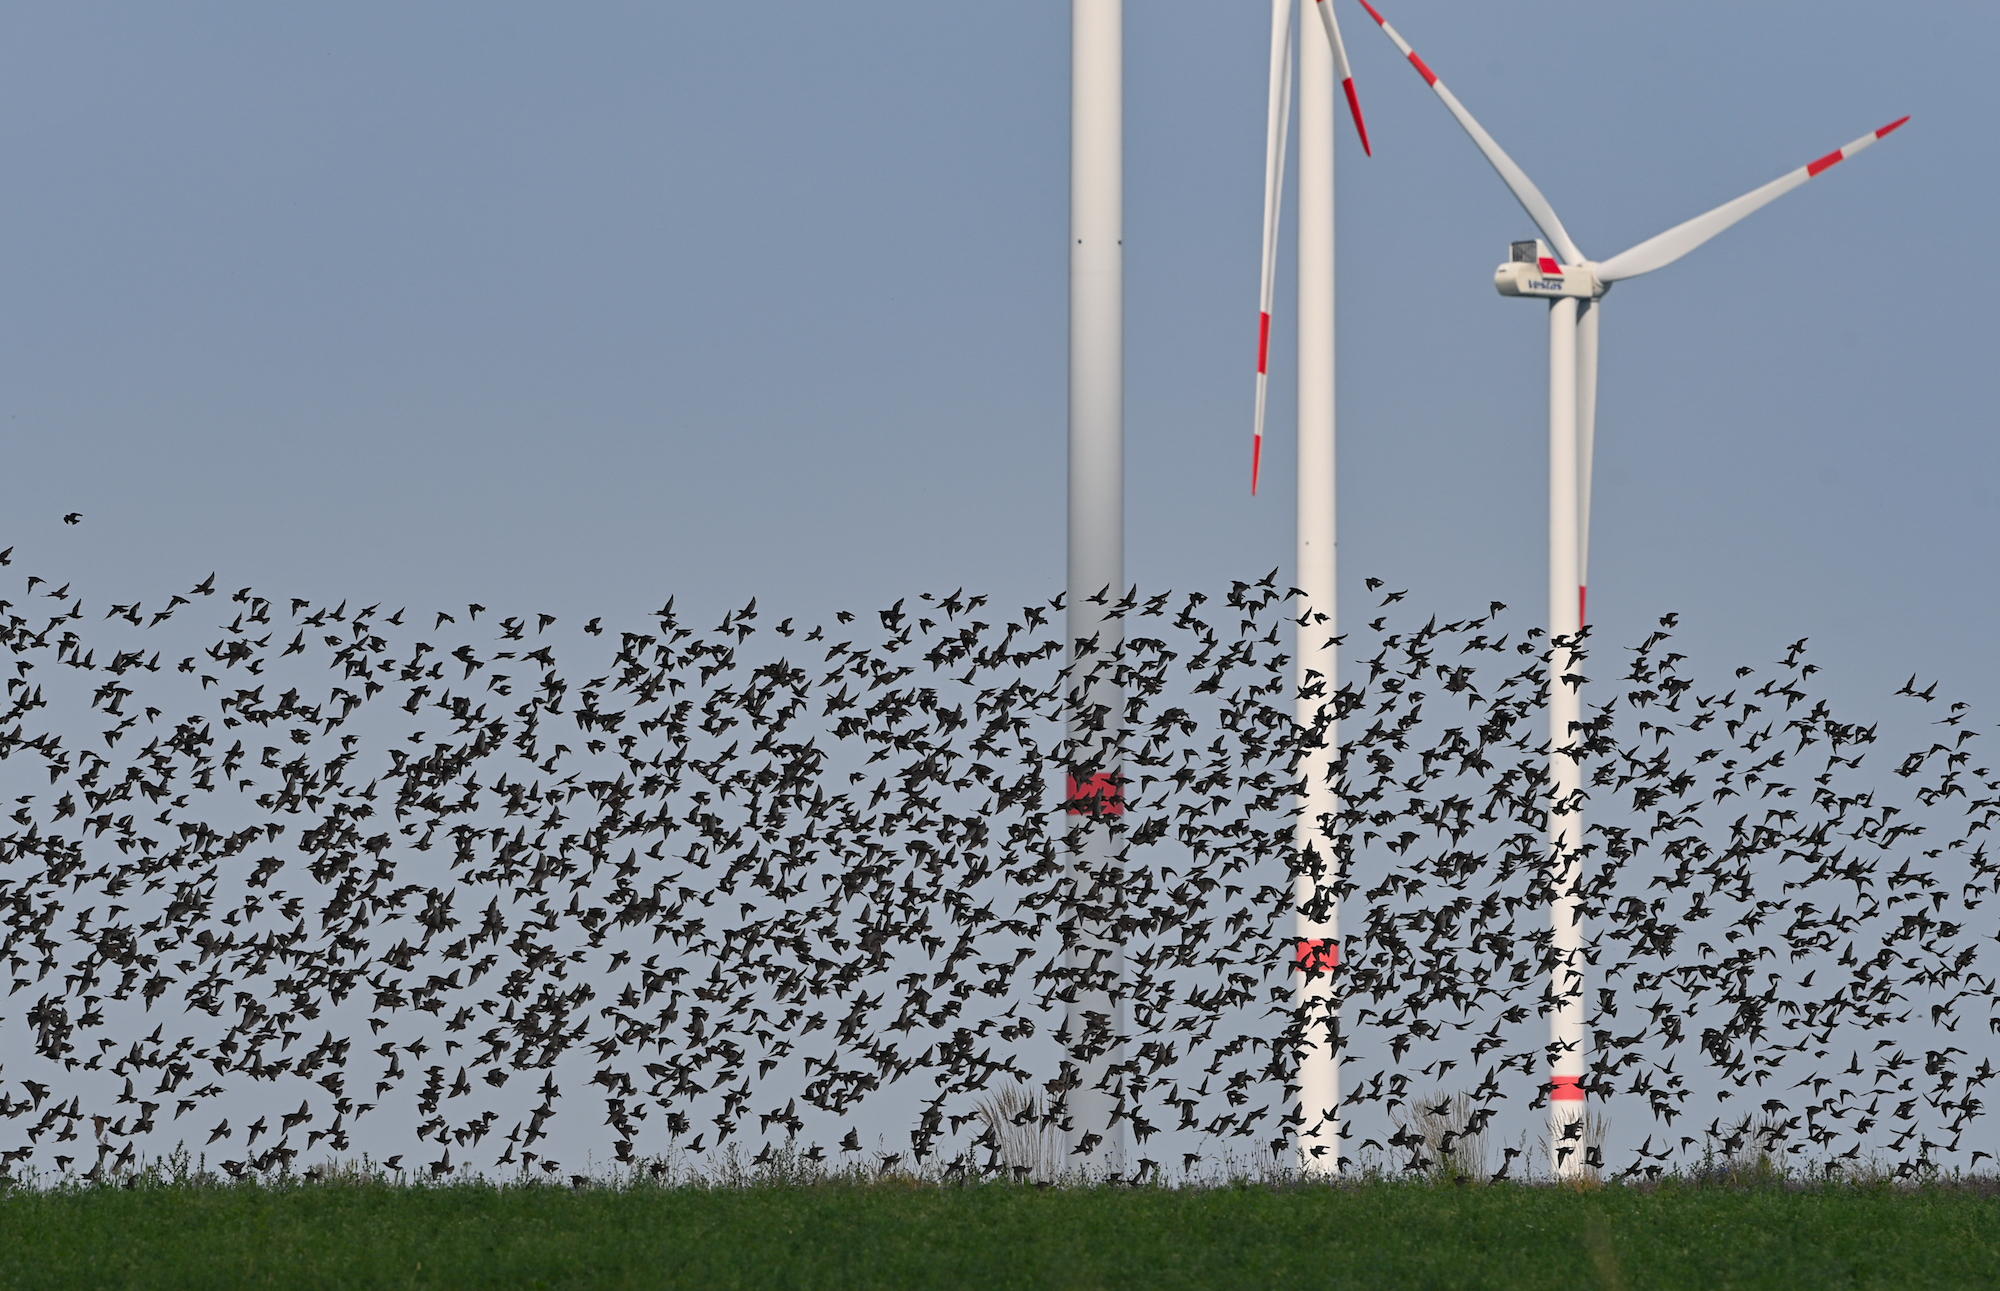 a large flock of black birds flies below wind turbines